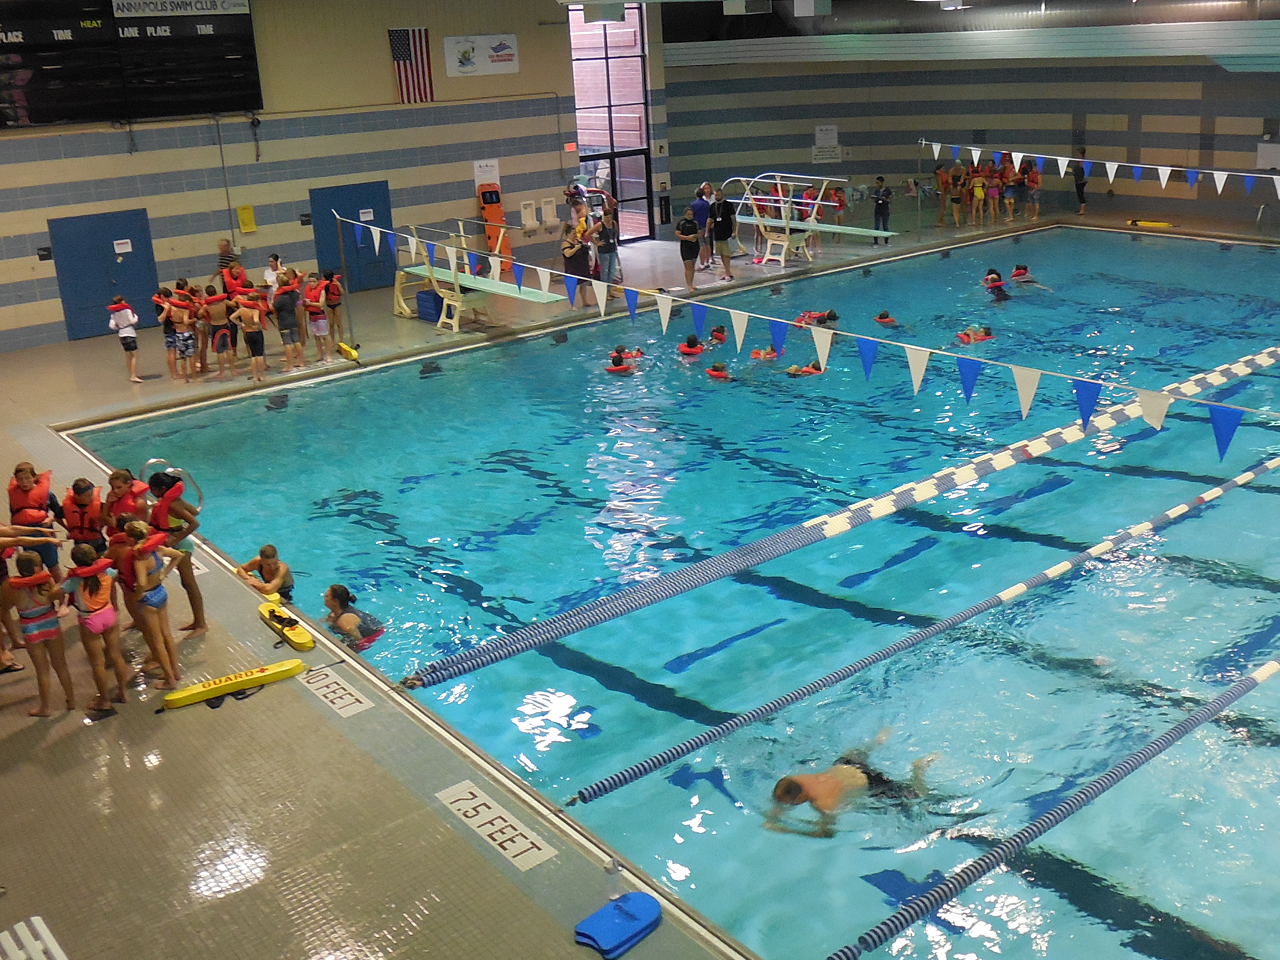 Arundel Olympic Swim Center